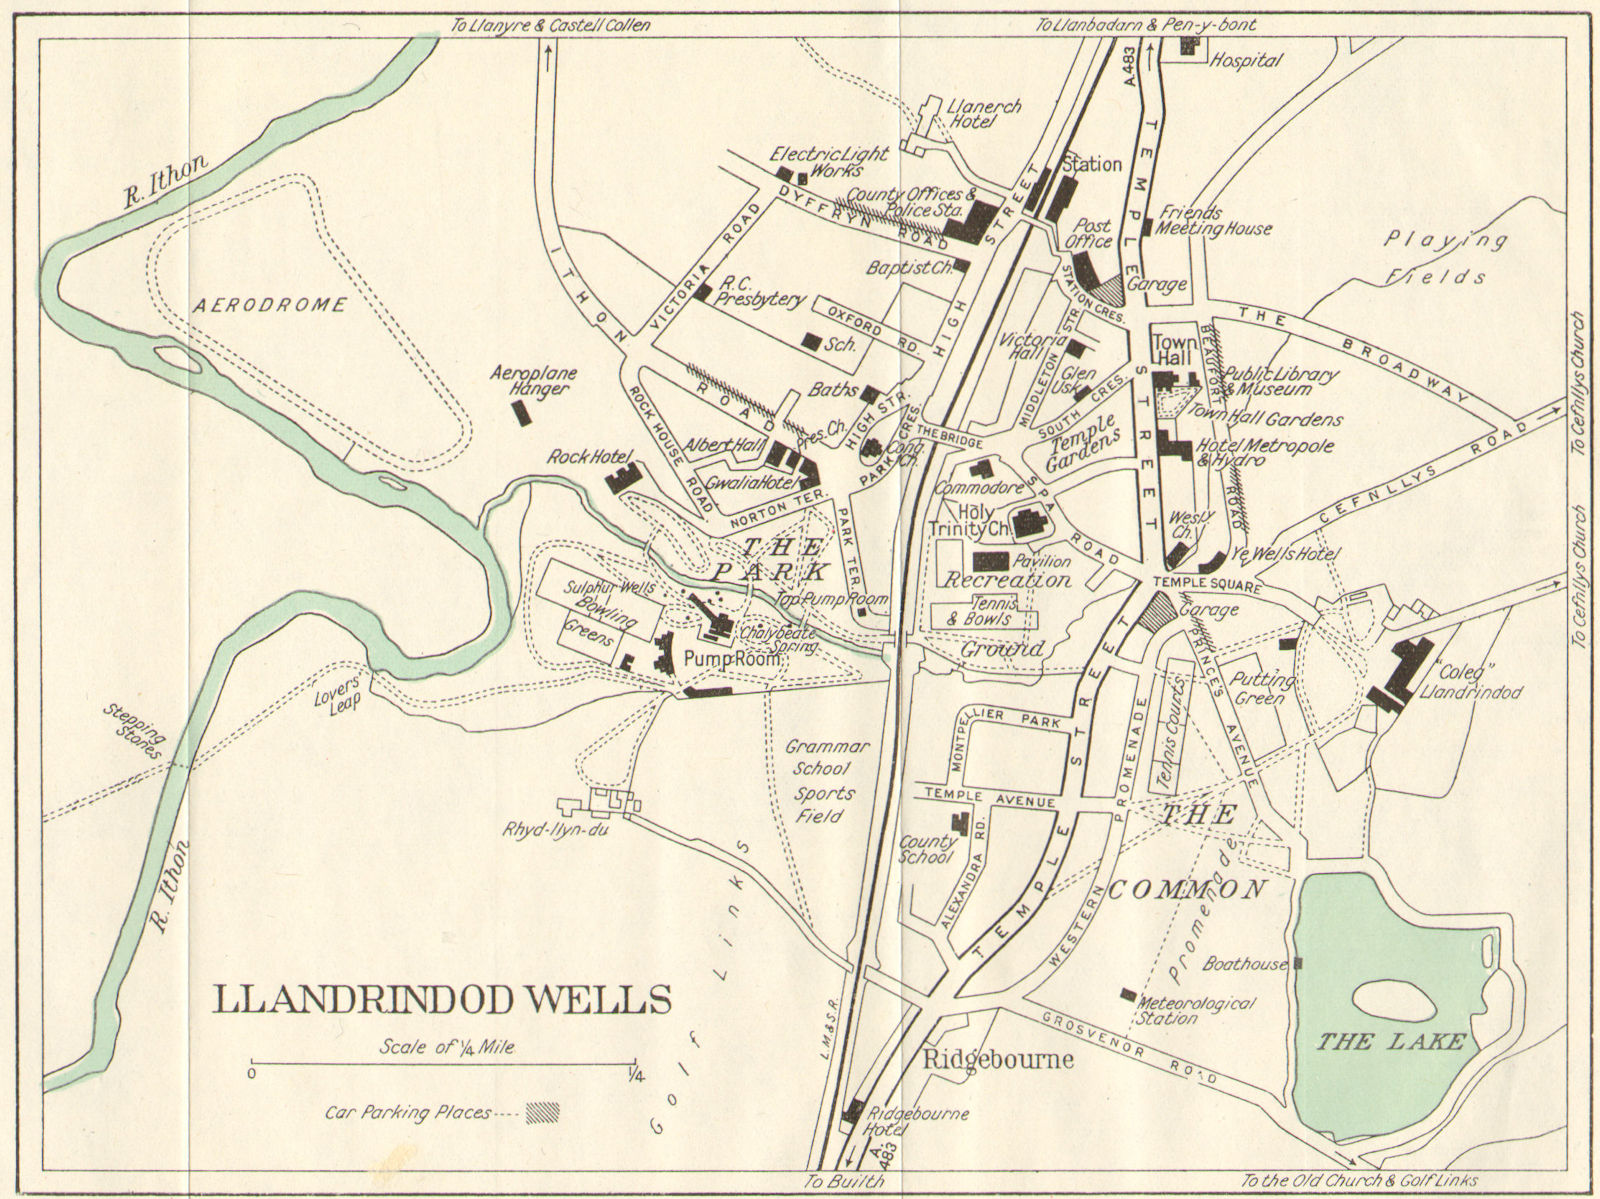 LLANDRINDOD WELLS vintage town/city plan. Wales. WARD LOCK c1950 old map